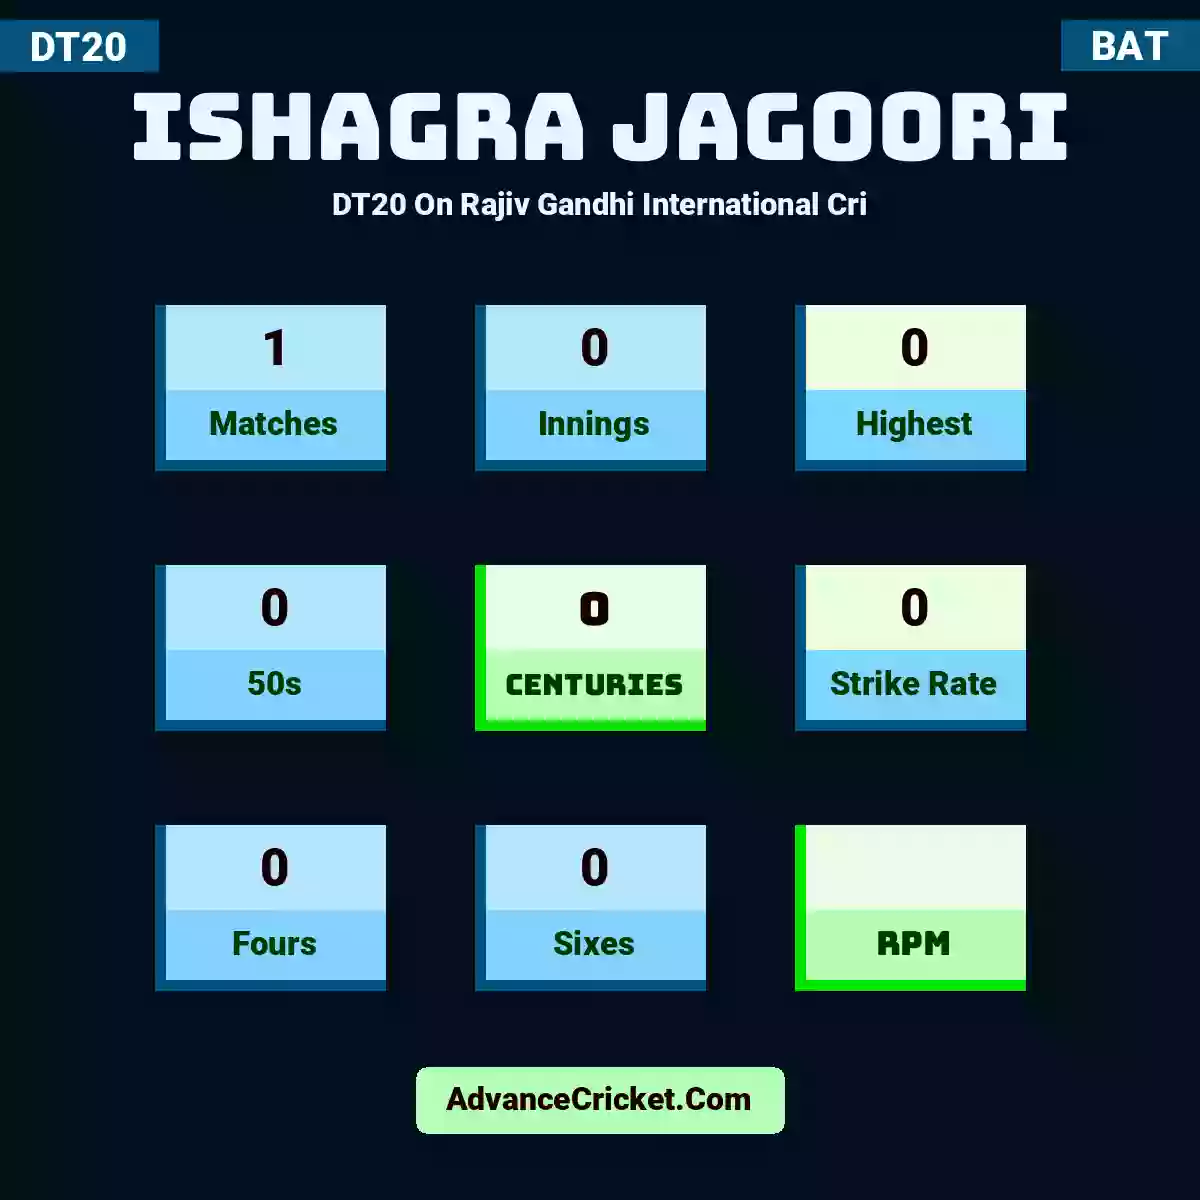 Ishagra Jagoori DT20  On Rajiv Gandhi International Cri, Ishagra Jagoori played 1 matches, scored 0 runs as highest, 0 half-centuries, and 0 centuries, with a strike rate of 0. I.Jagoori hit 0 fours and 0 sixes.